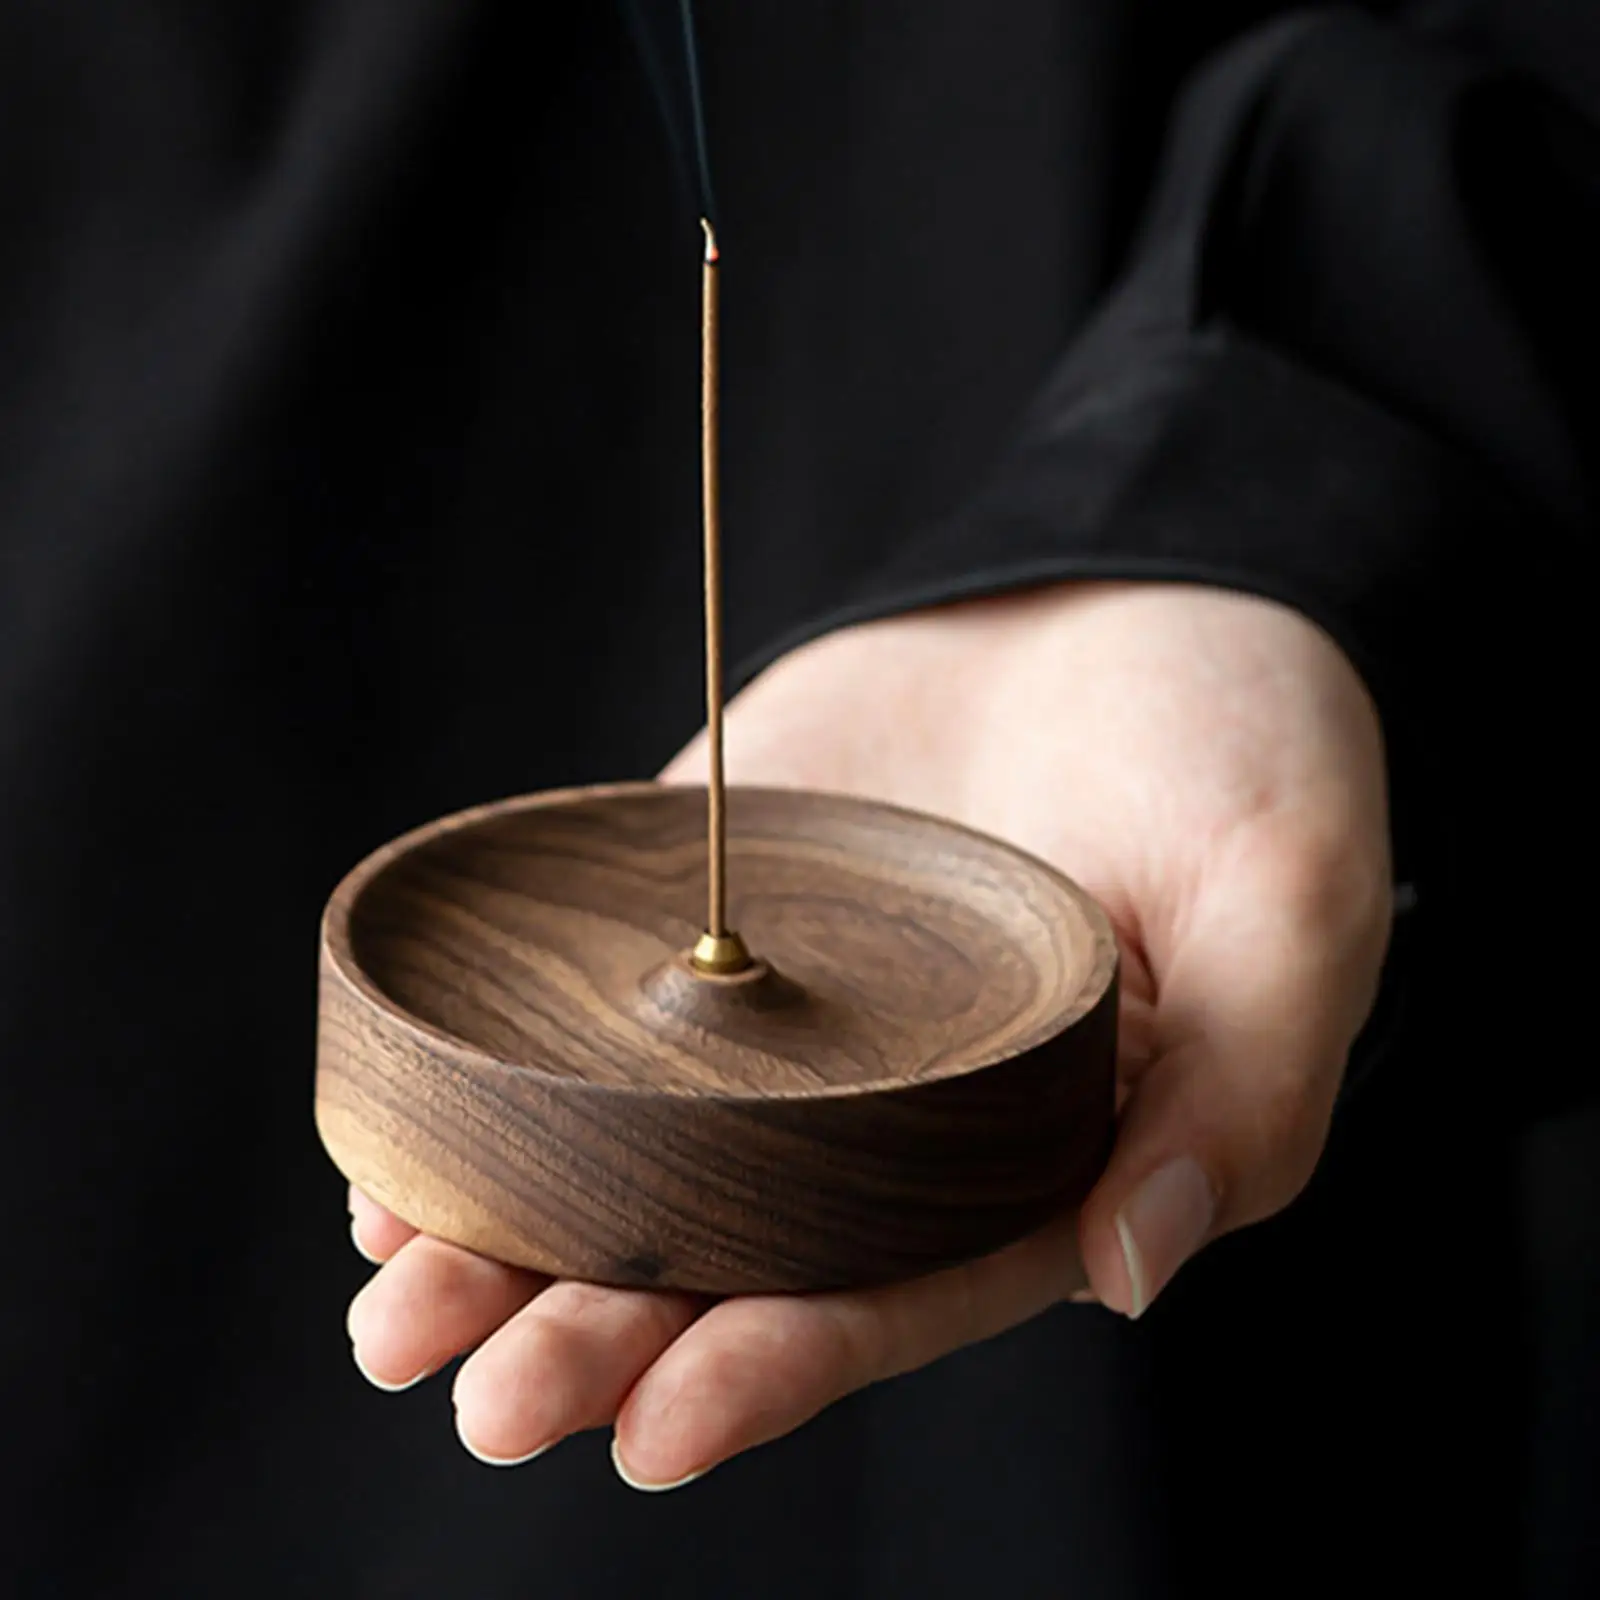 Wooden Round Incense Burner Incense Sticks Holder Portable Diffuser Incense Bowl for SPA Teahouse Living Room Office Yoga